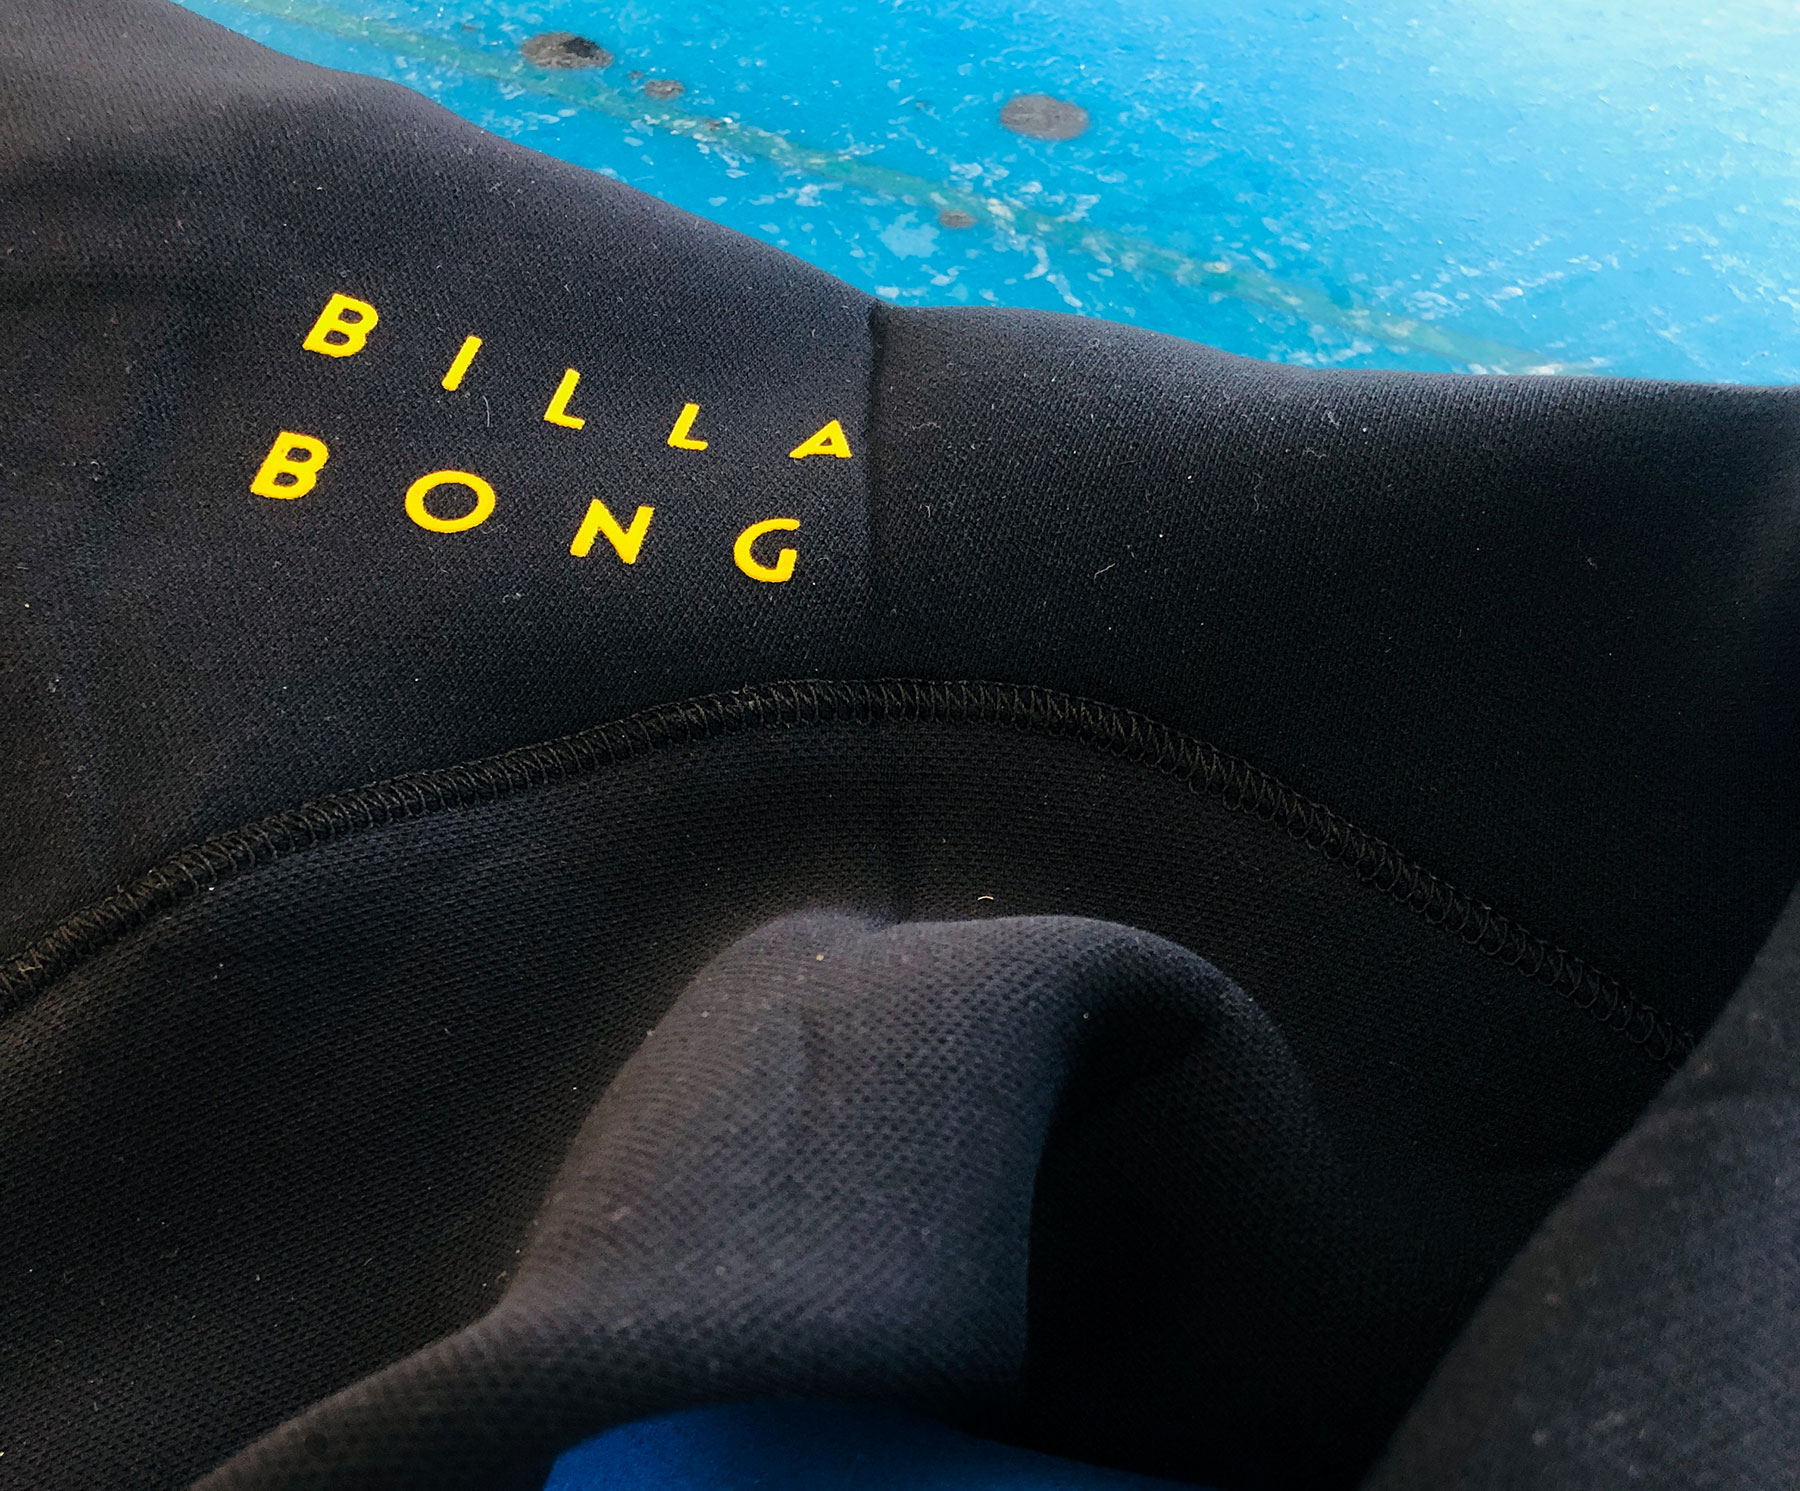 Billabong Pro Series Wetsuit Review